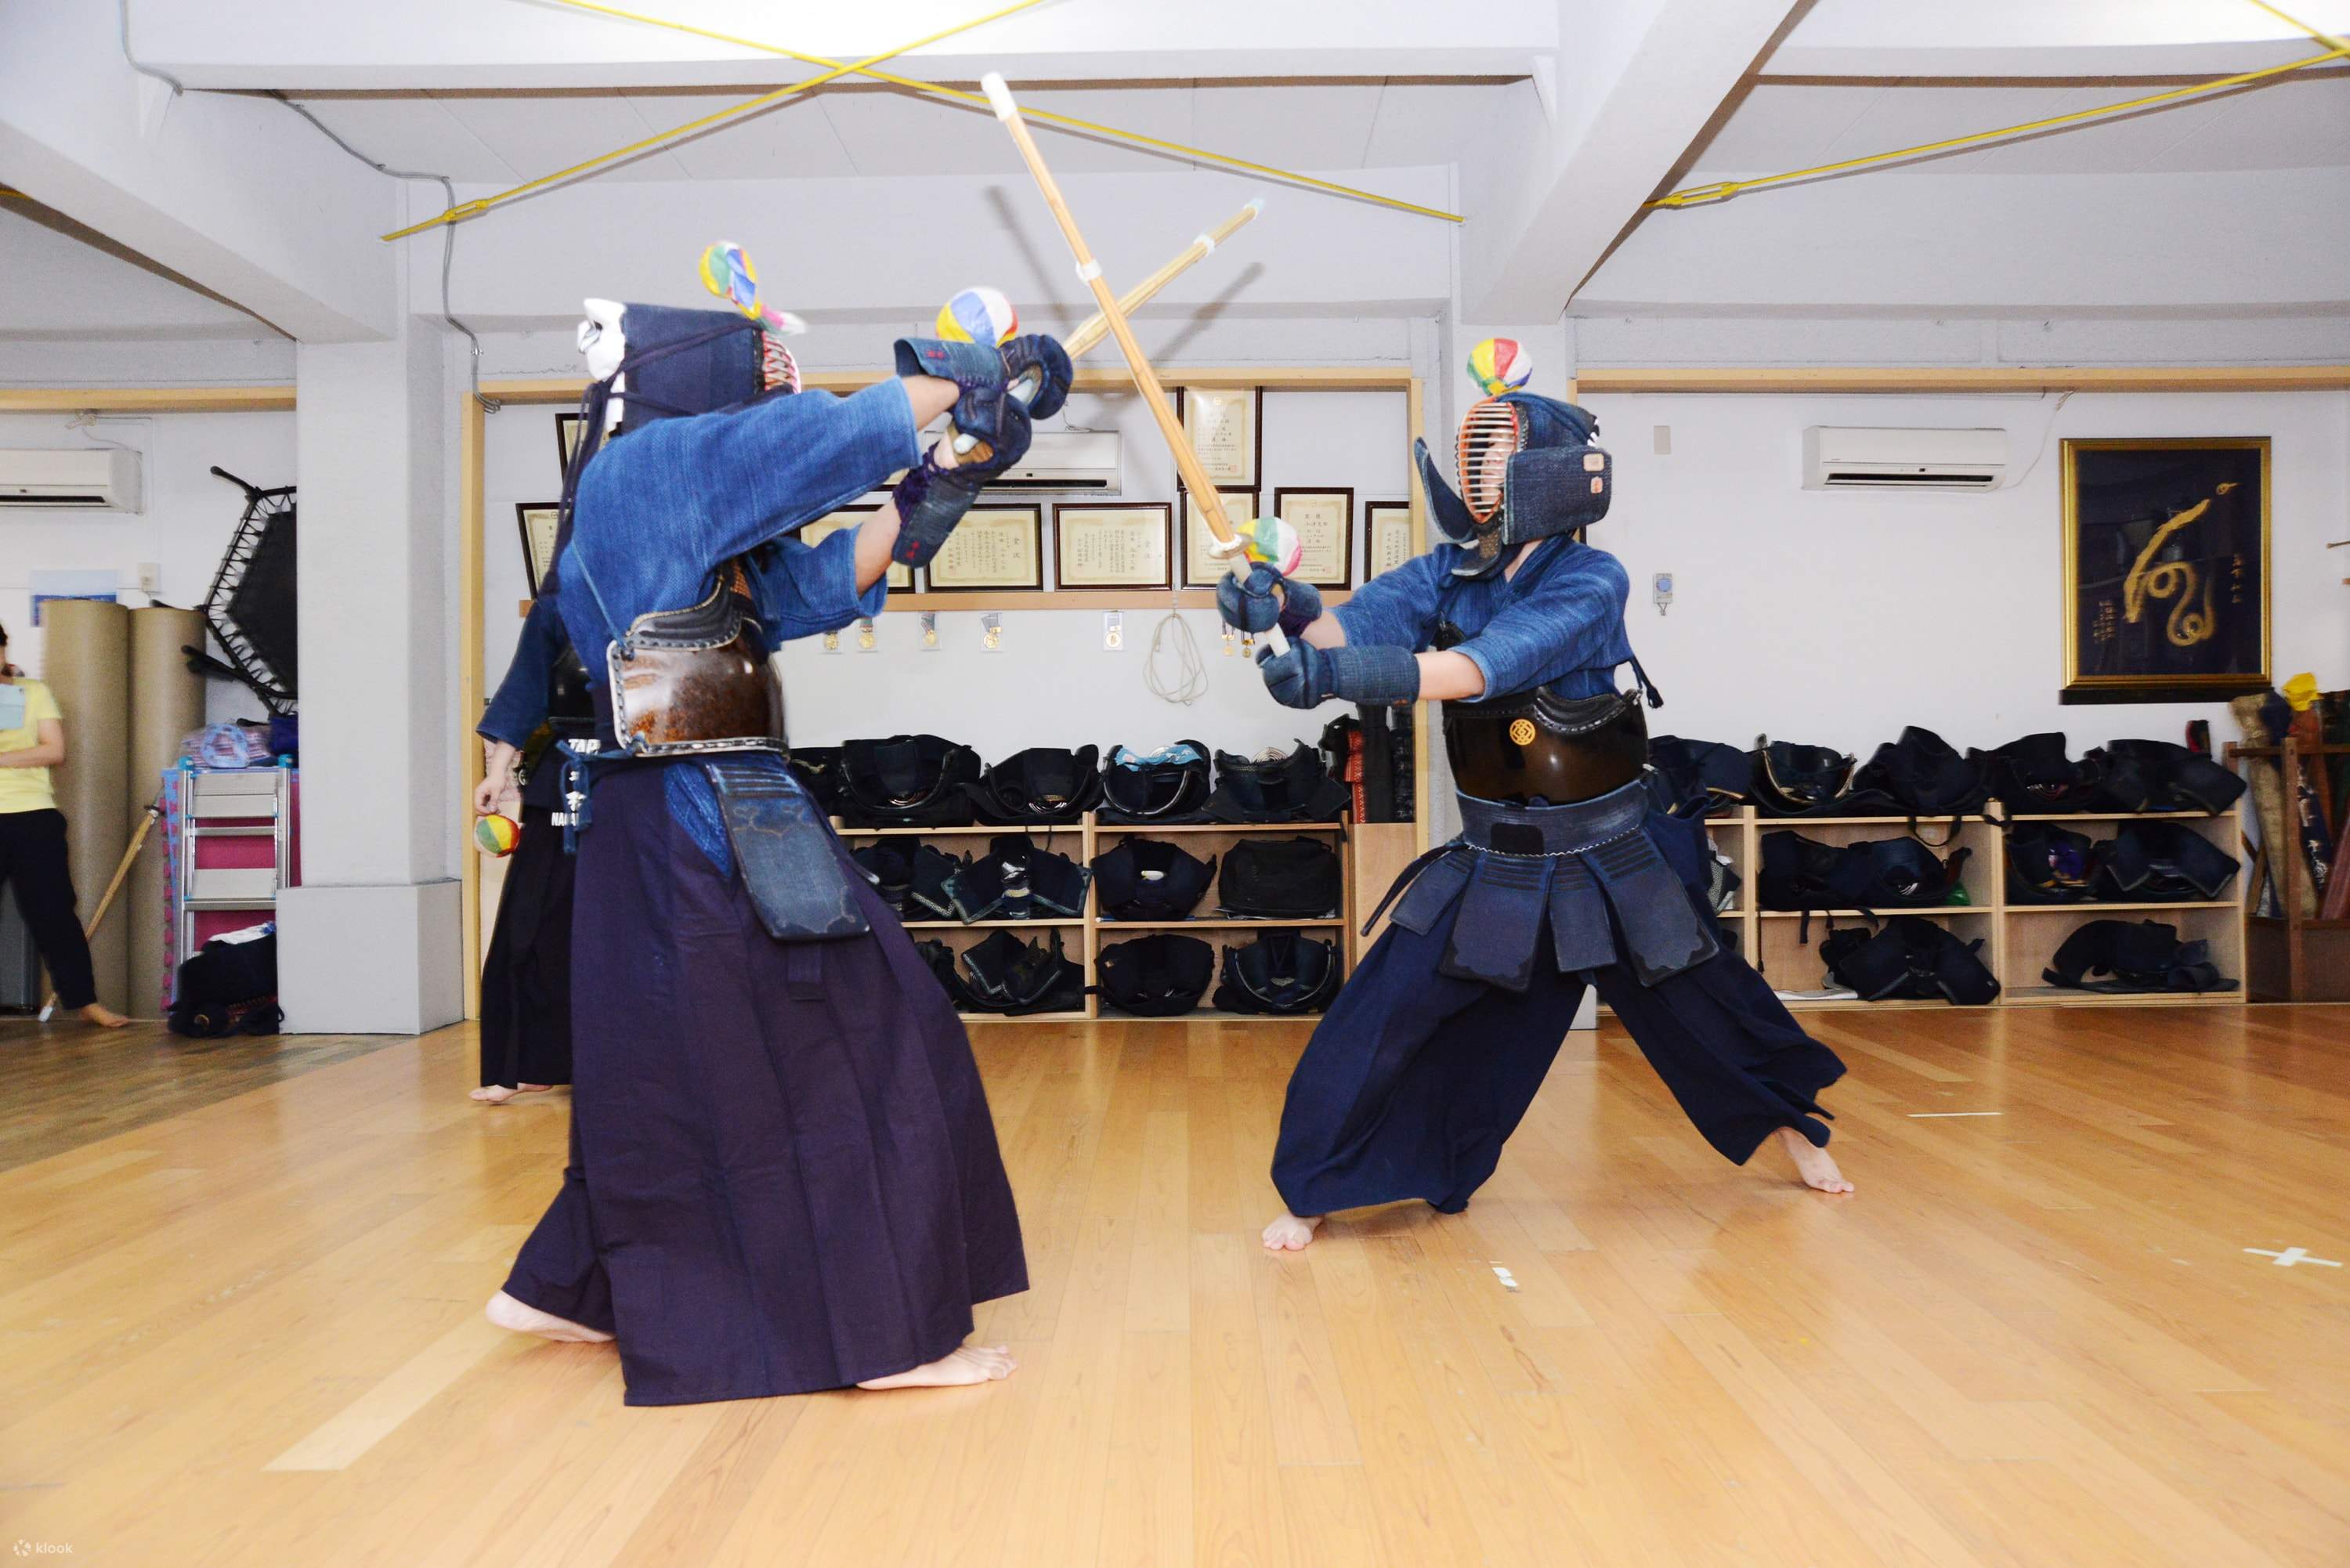 Samurai Armor Experience in Tokyo, Japan - Klook Philippines